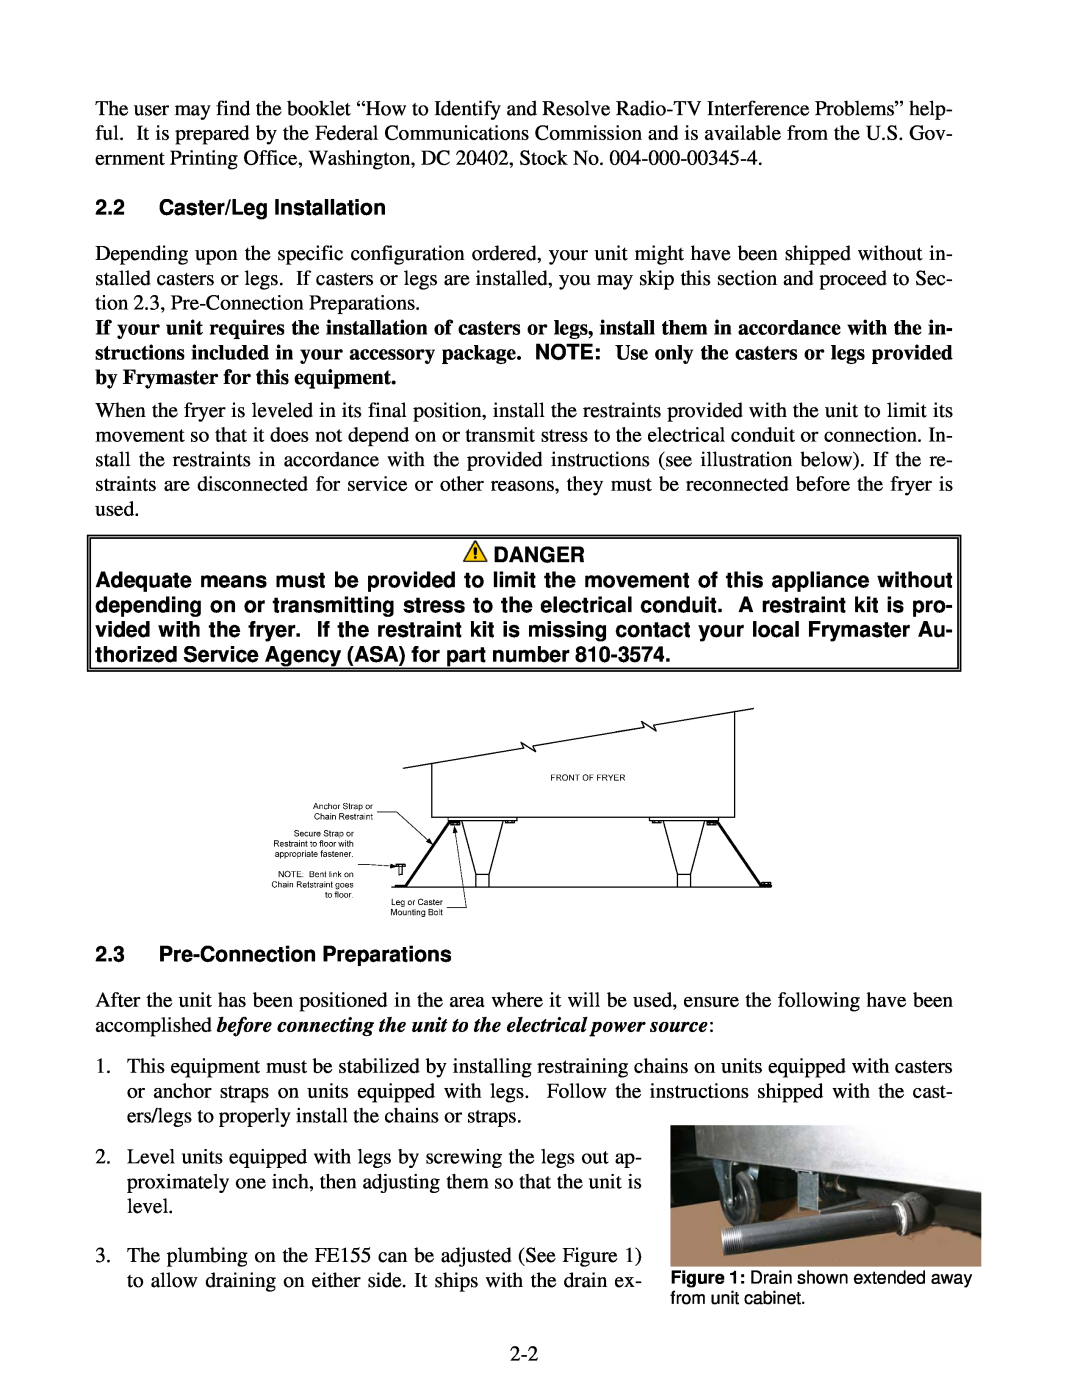 Frymaster FE155 operation manual Caster/Leg Installation, Pre-Connection Preparations, Danger 